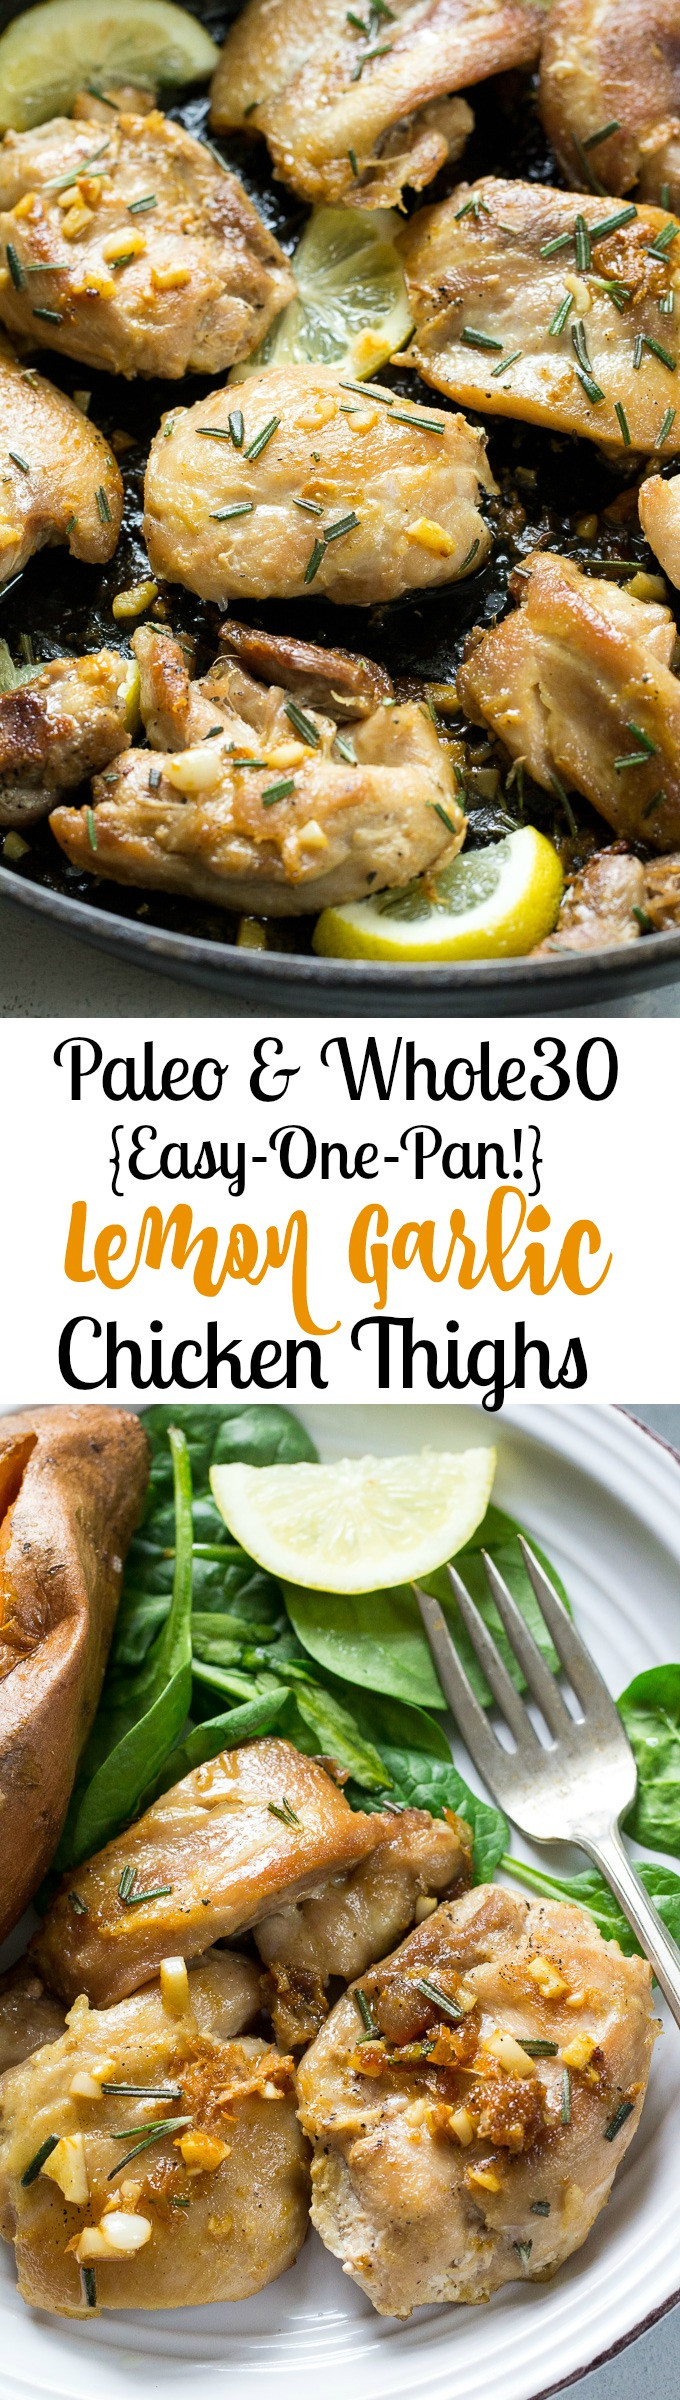 Chicken Thighs Recipe Paleo
 Easy Lemon Garlic Chicken Thighs Paleo & Whole30